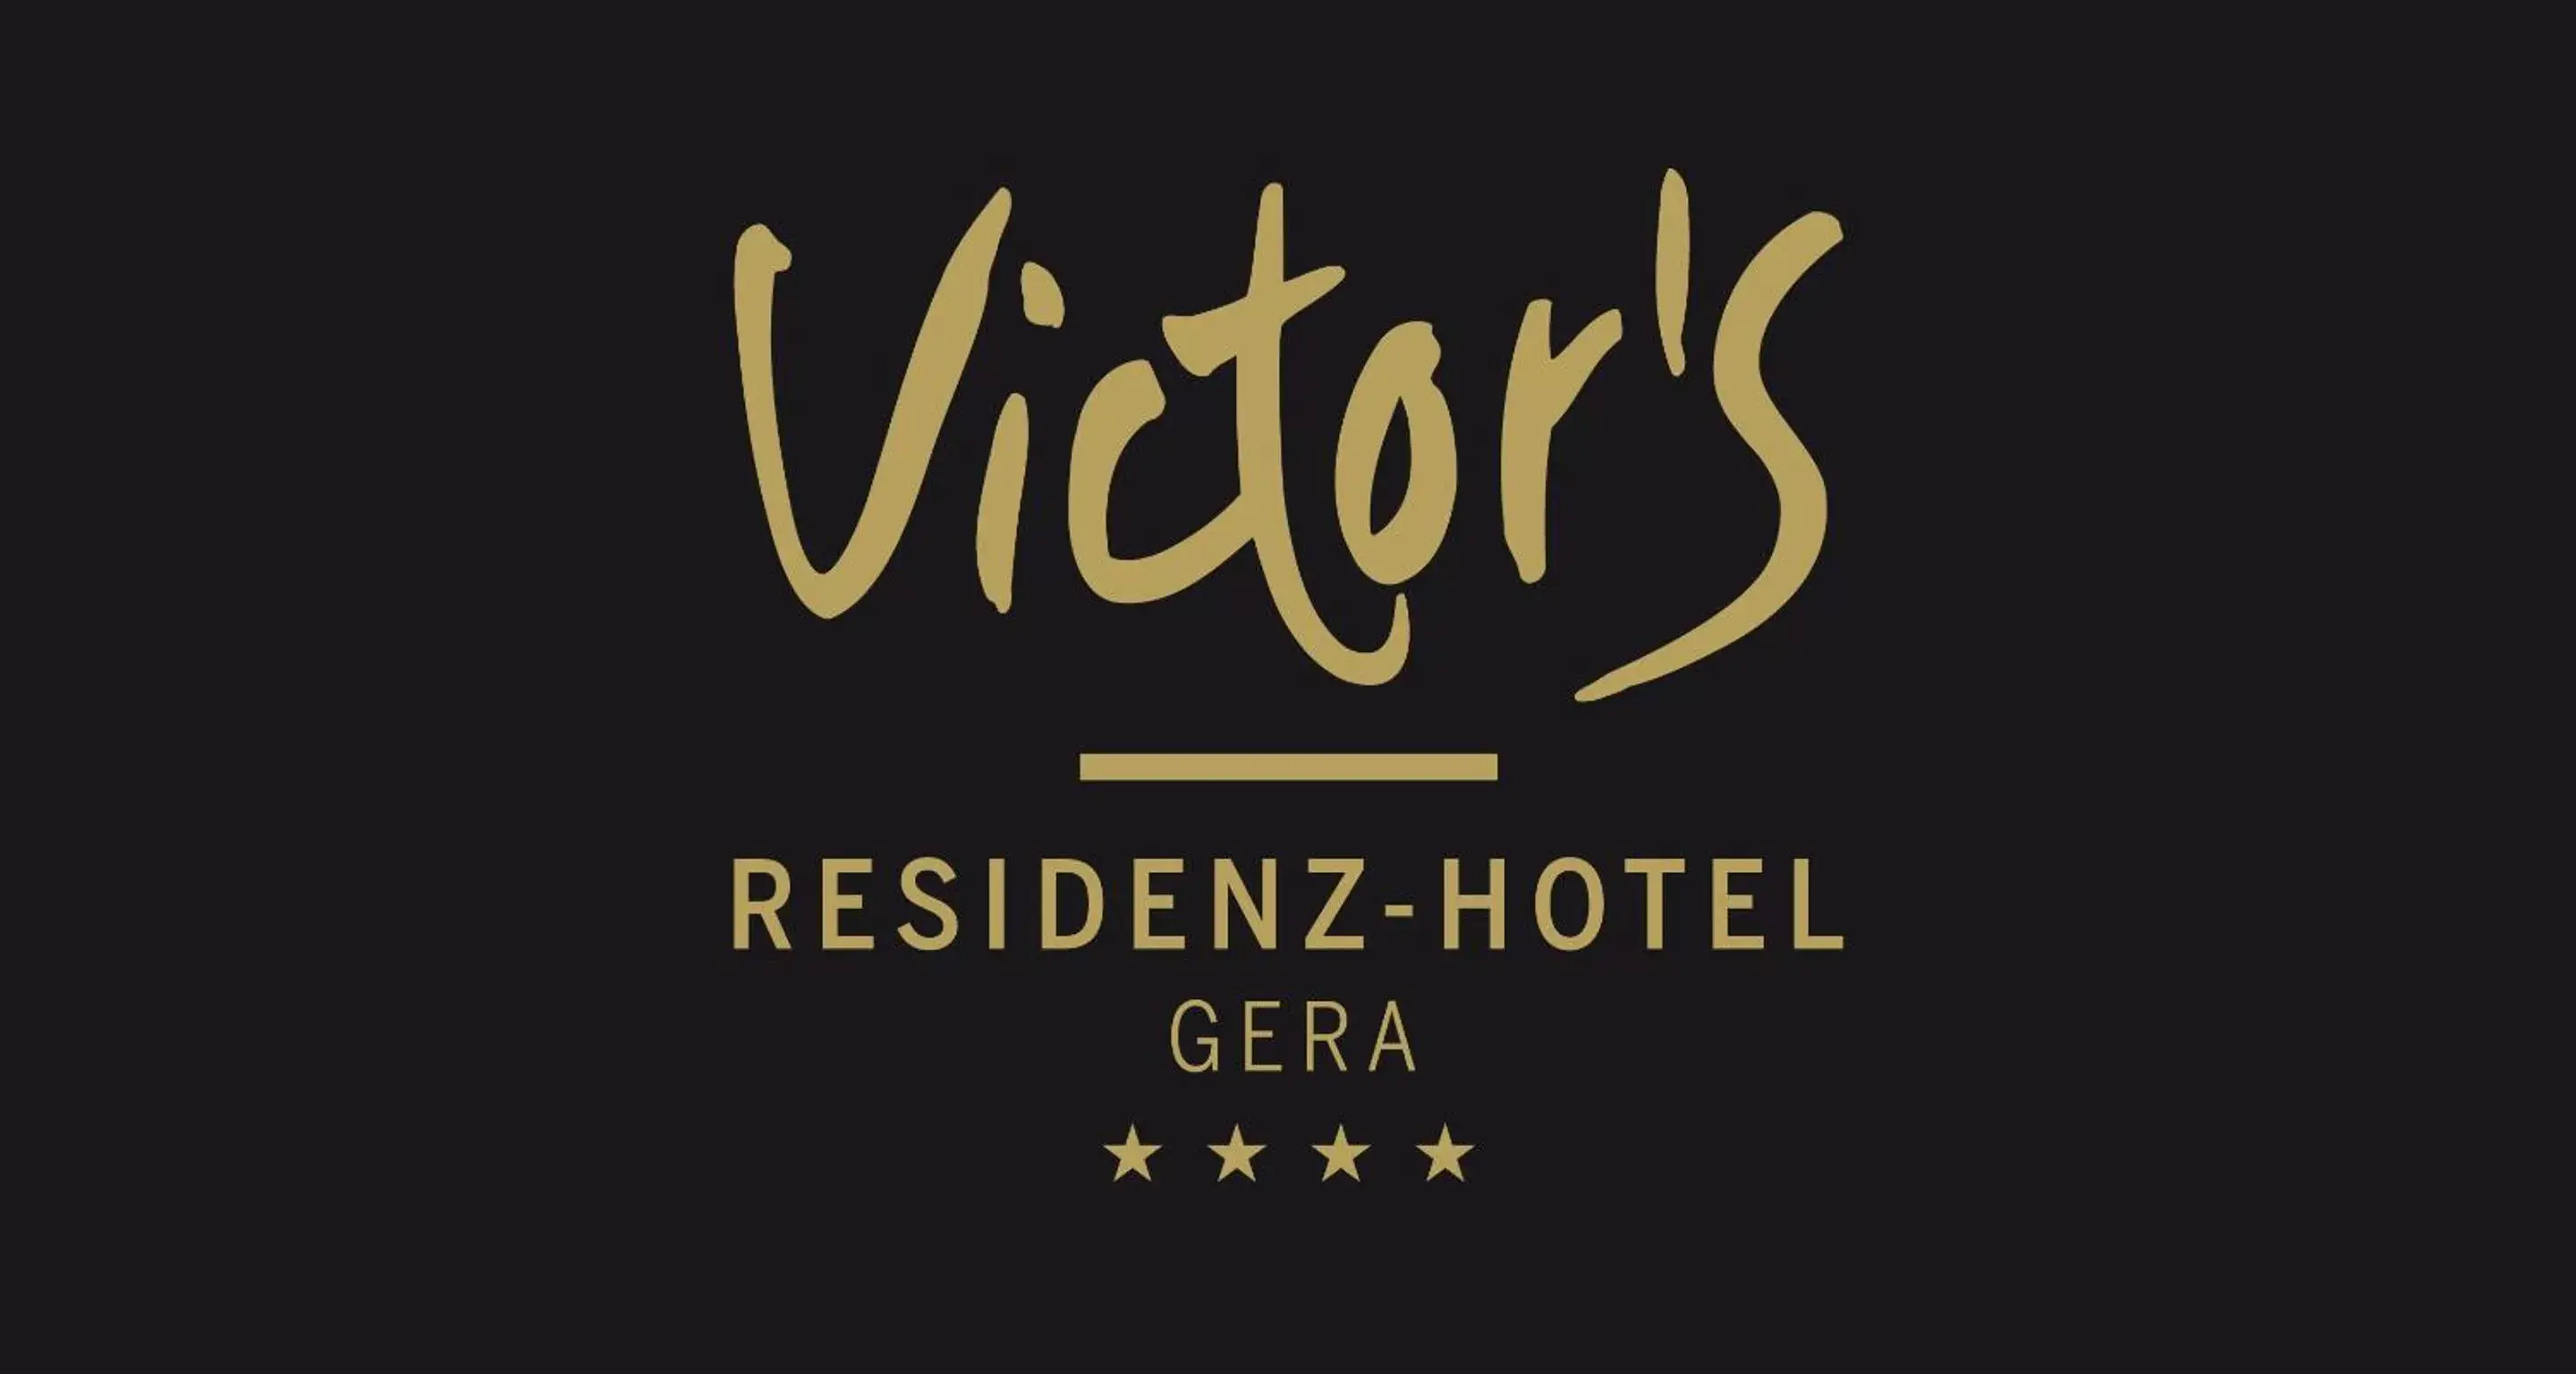 Property logo or sign, Property Logo/Sign in Victor's Residenz-Hotel Gera